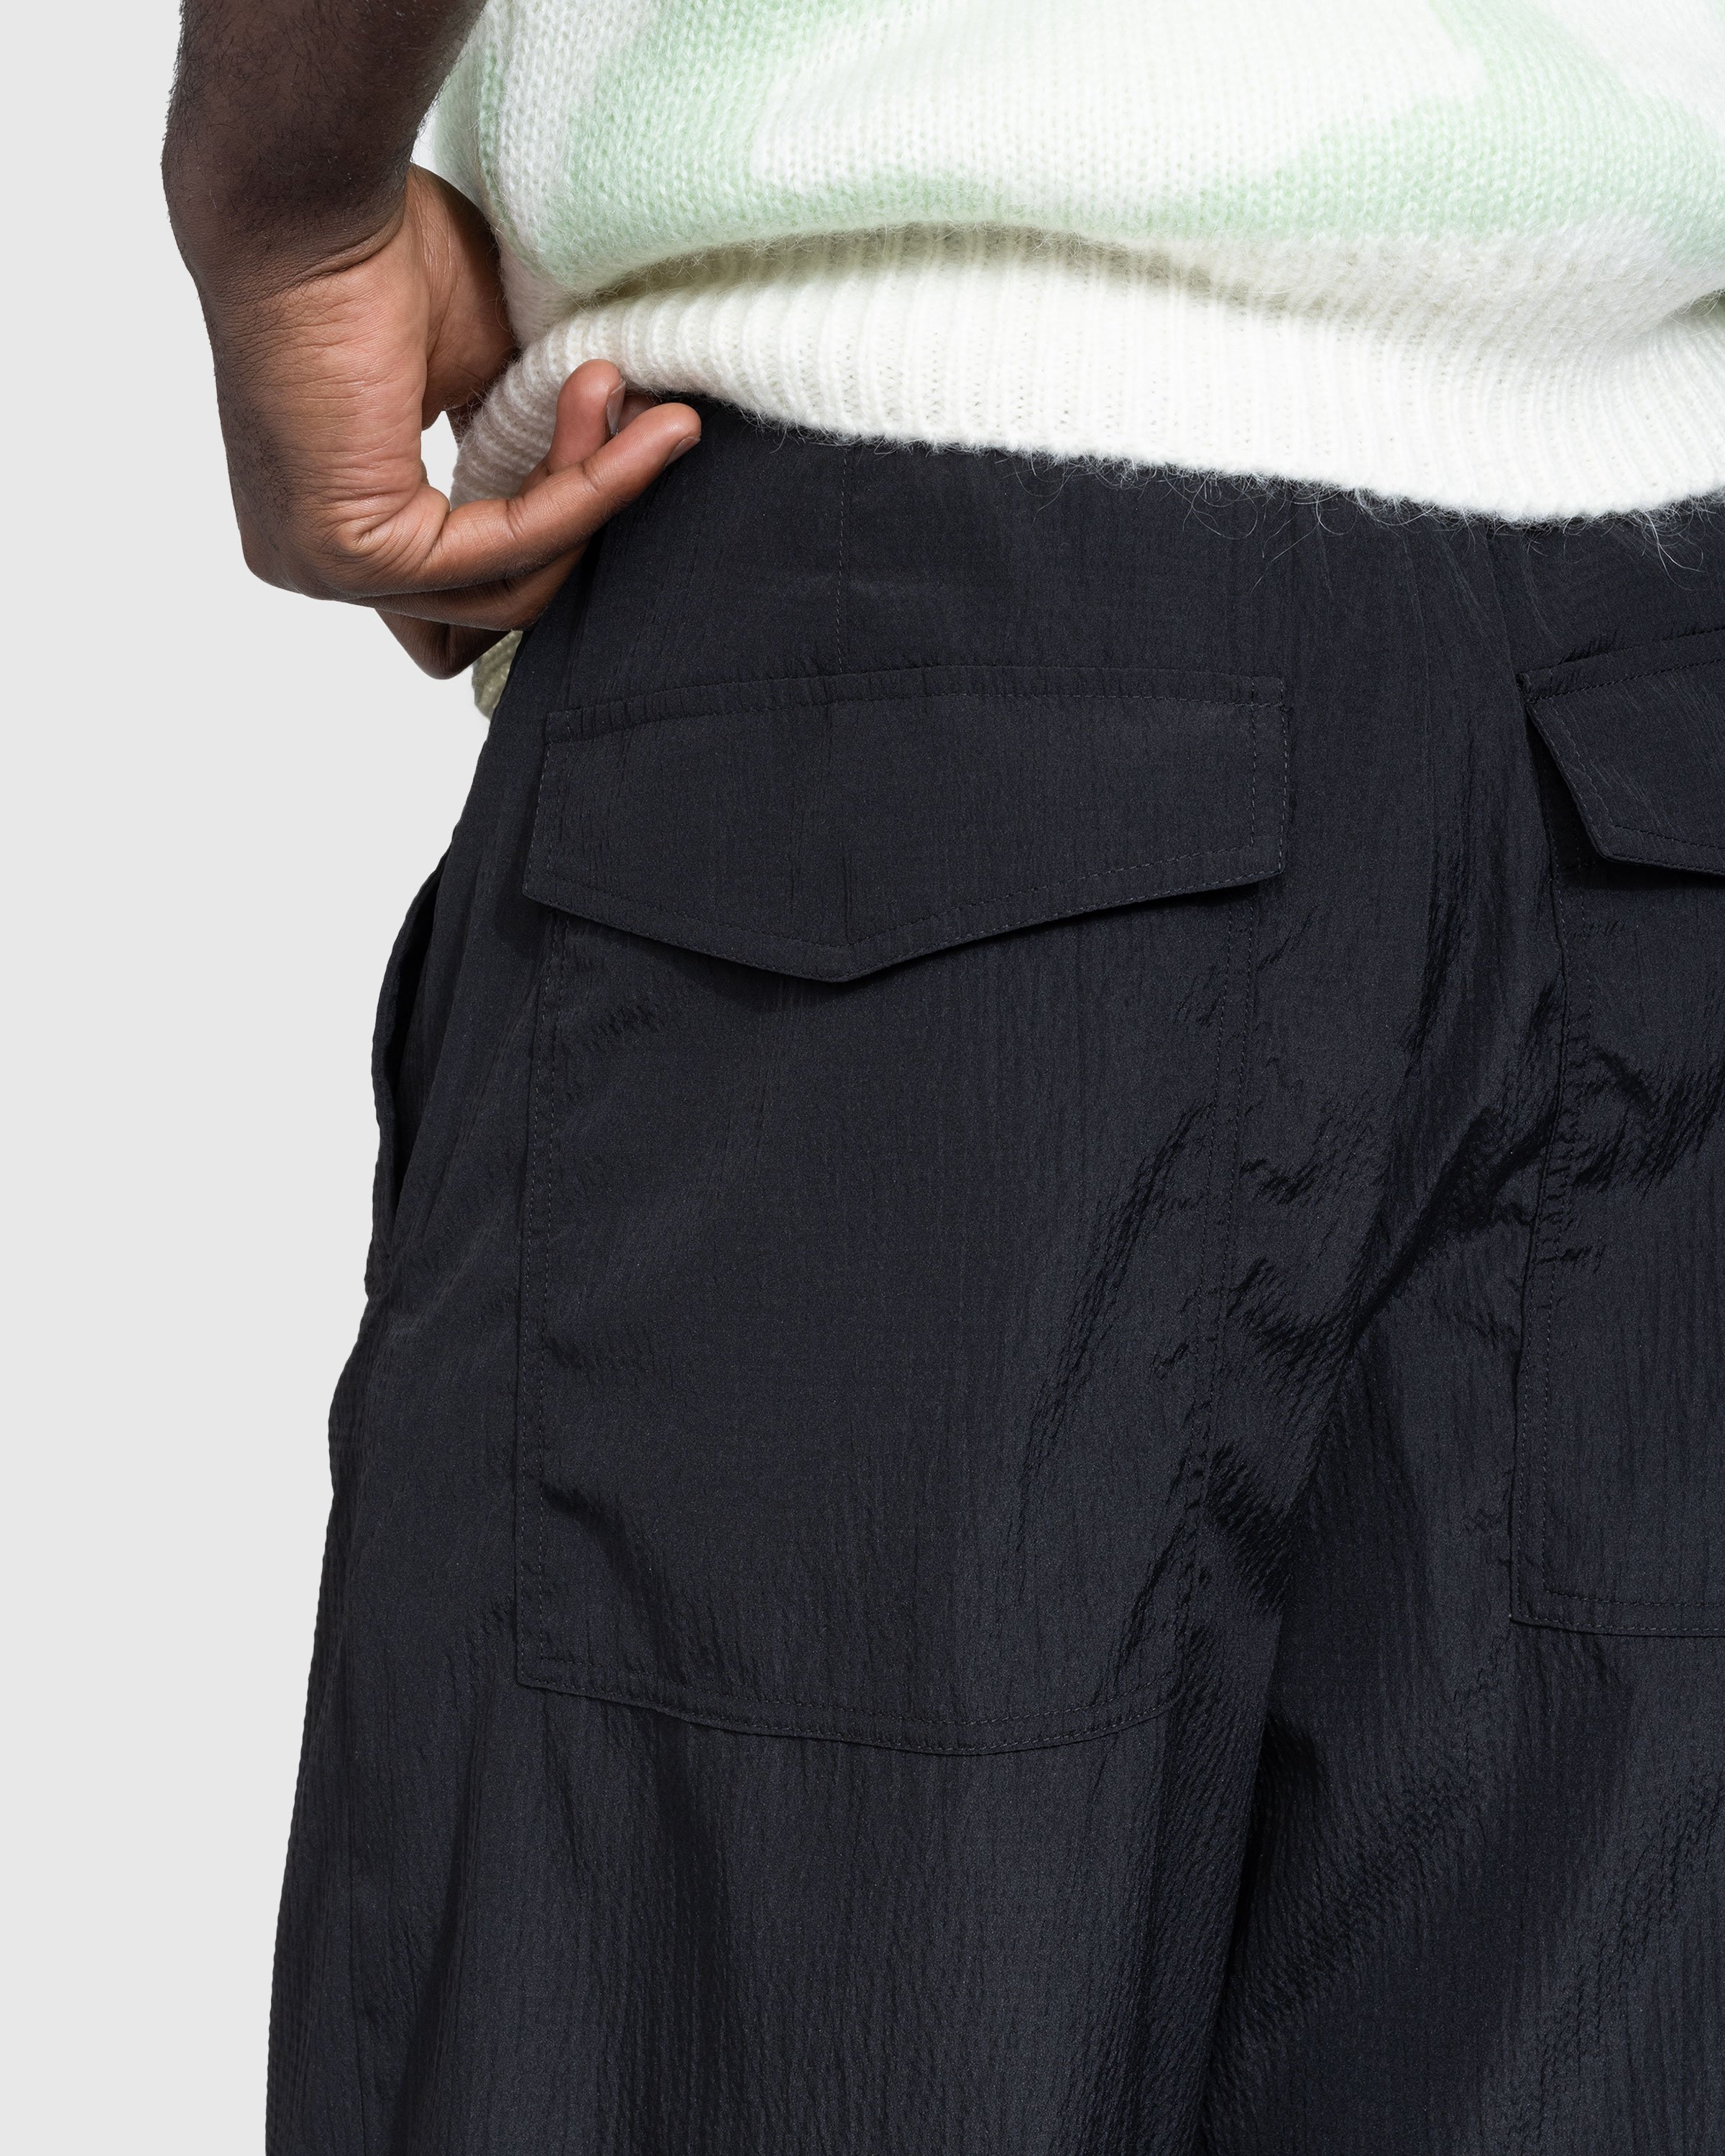 Dries van Noten - Portby Tris Pants Black - Clothing - Black - Image 4